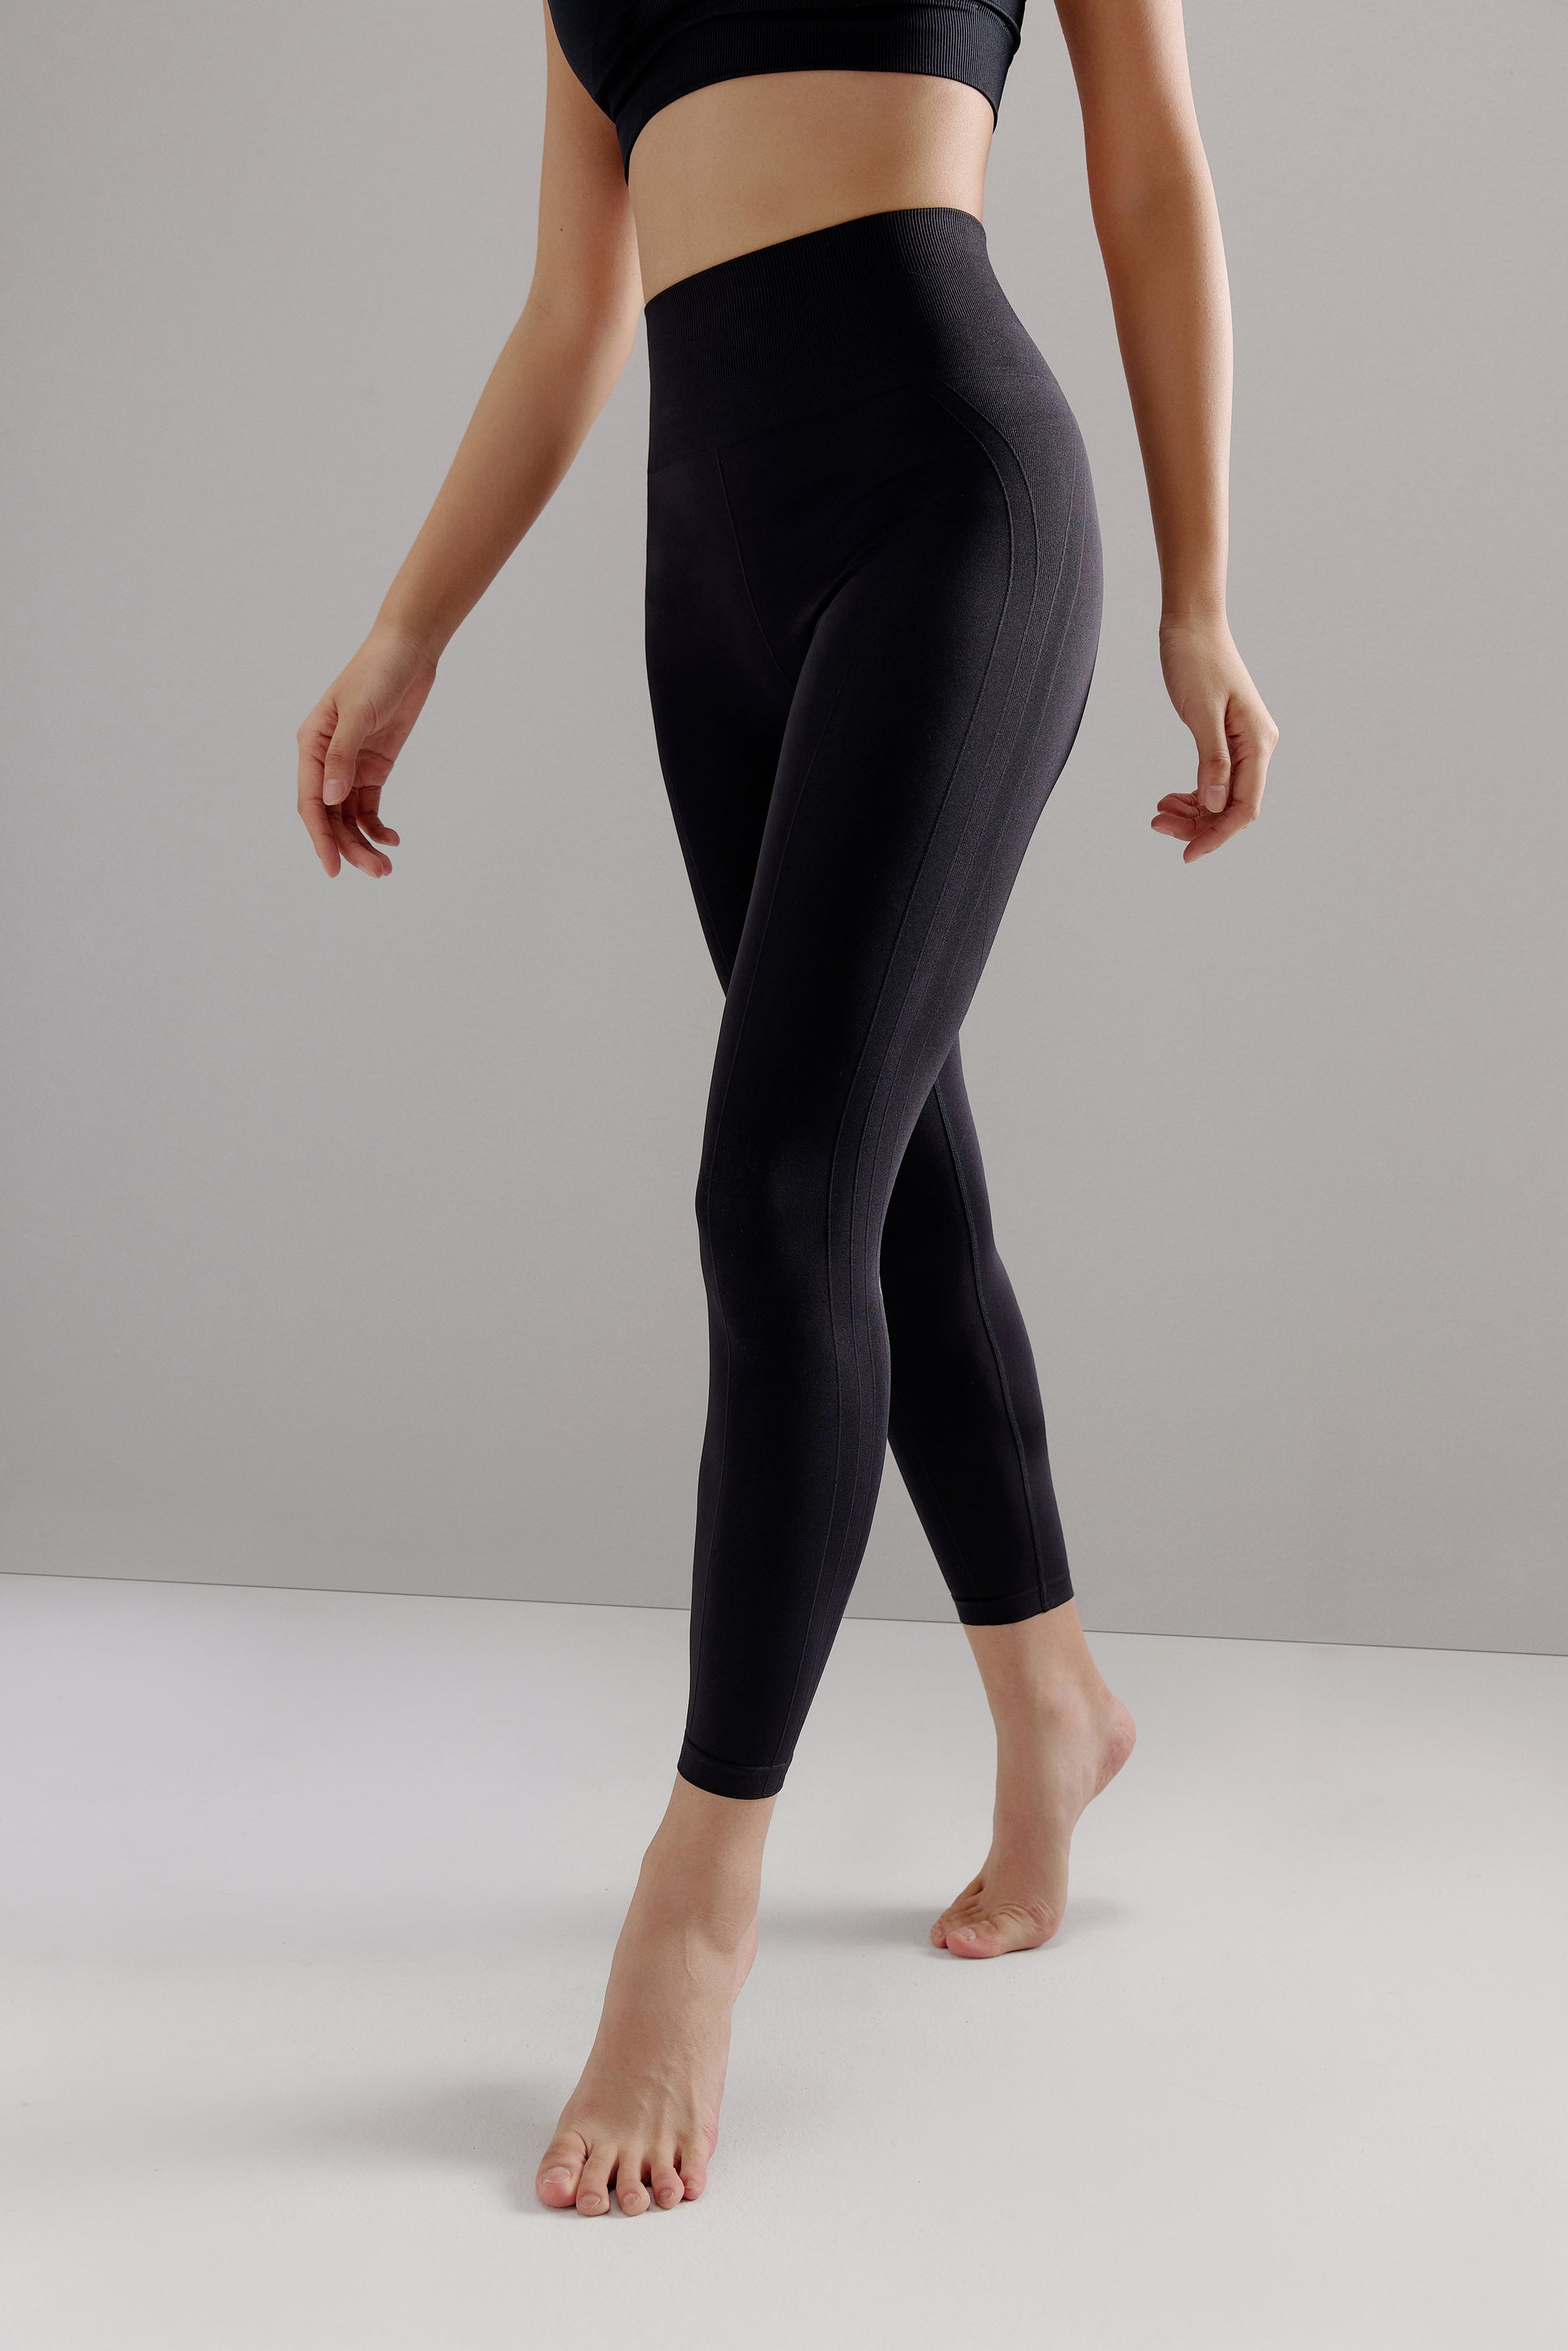 Intensify Core Ankle High-Waist Mesh Pocket Legging Yoga pants